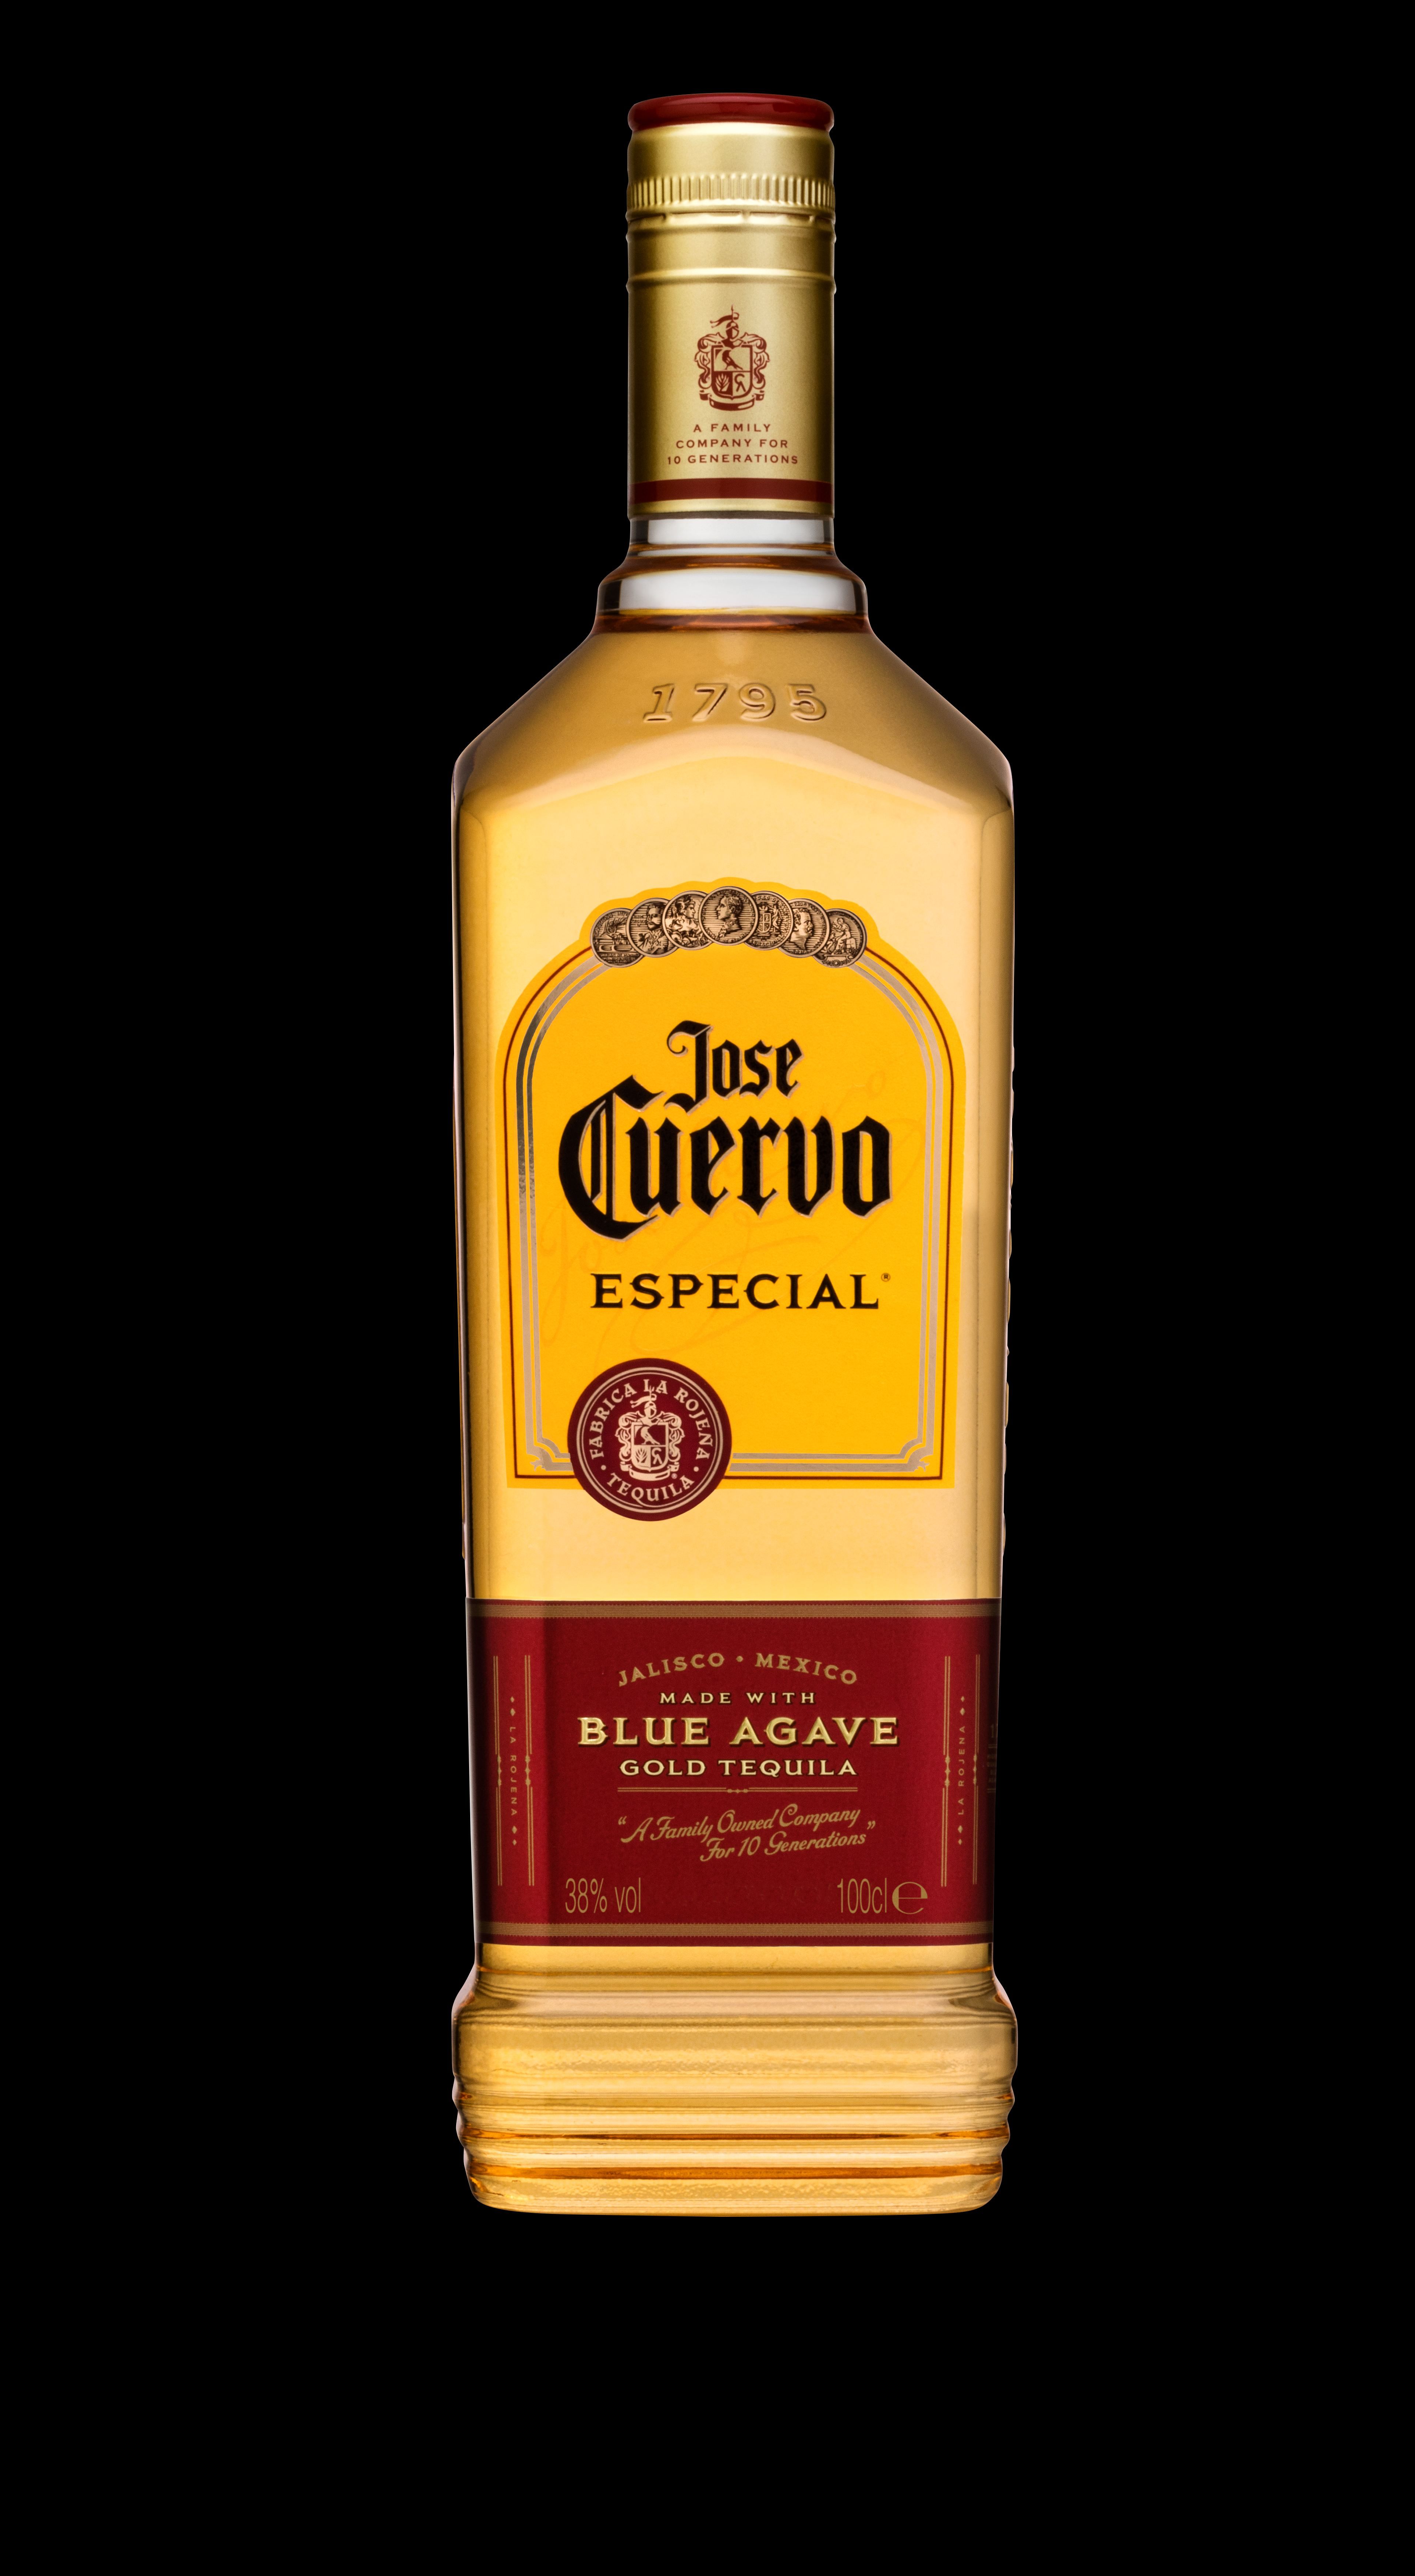 Tequila José Cuervo Especial Gold   